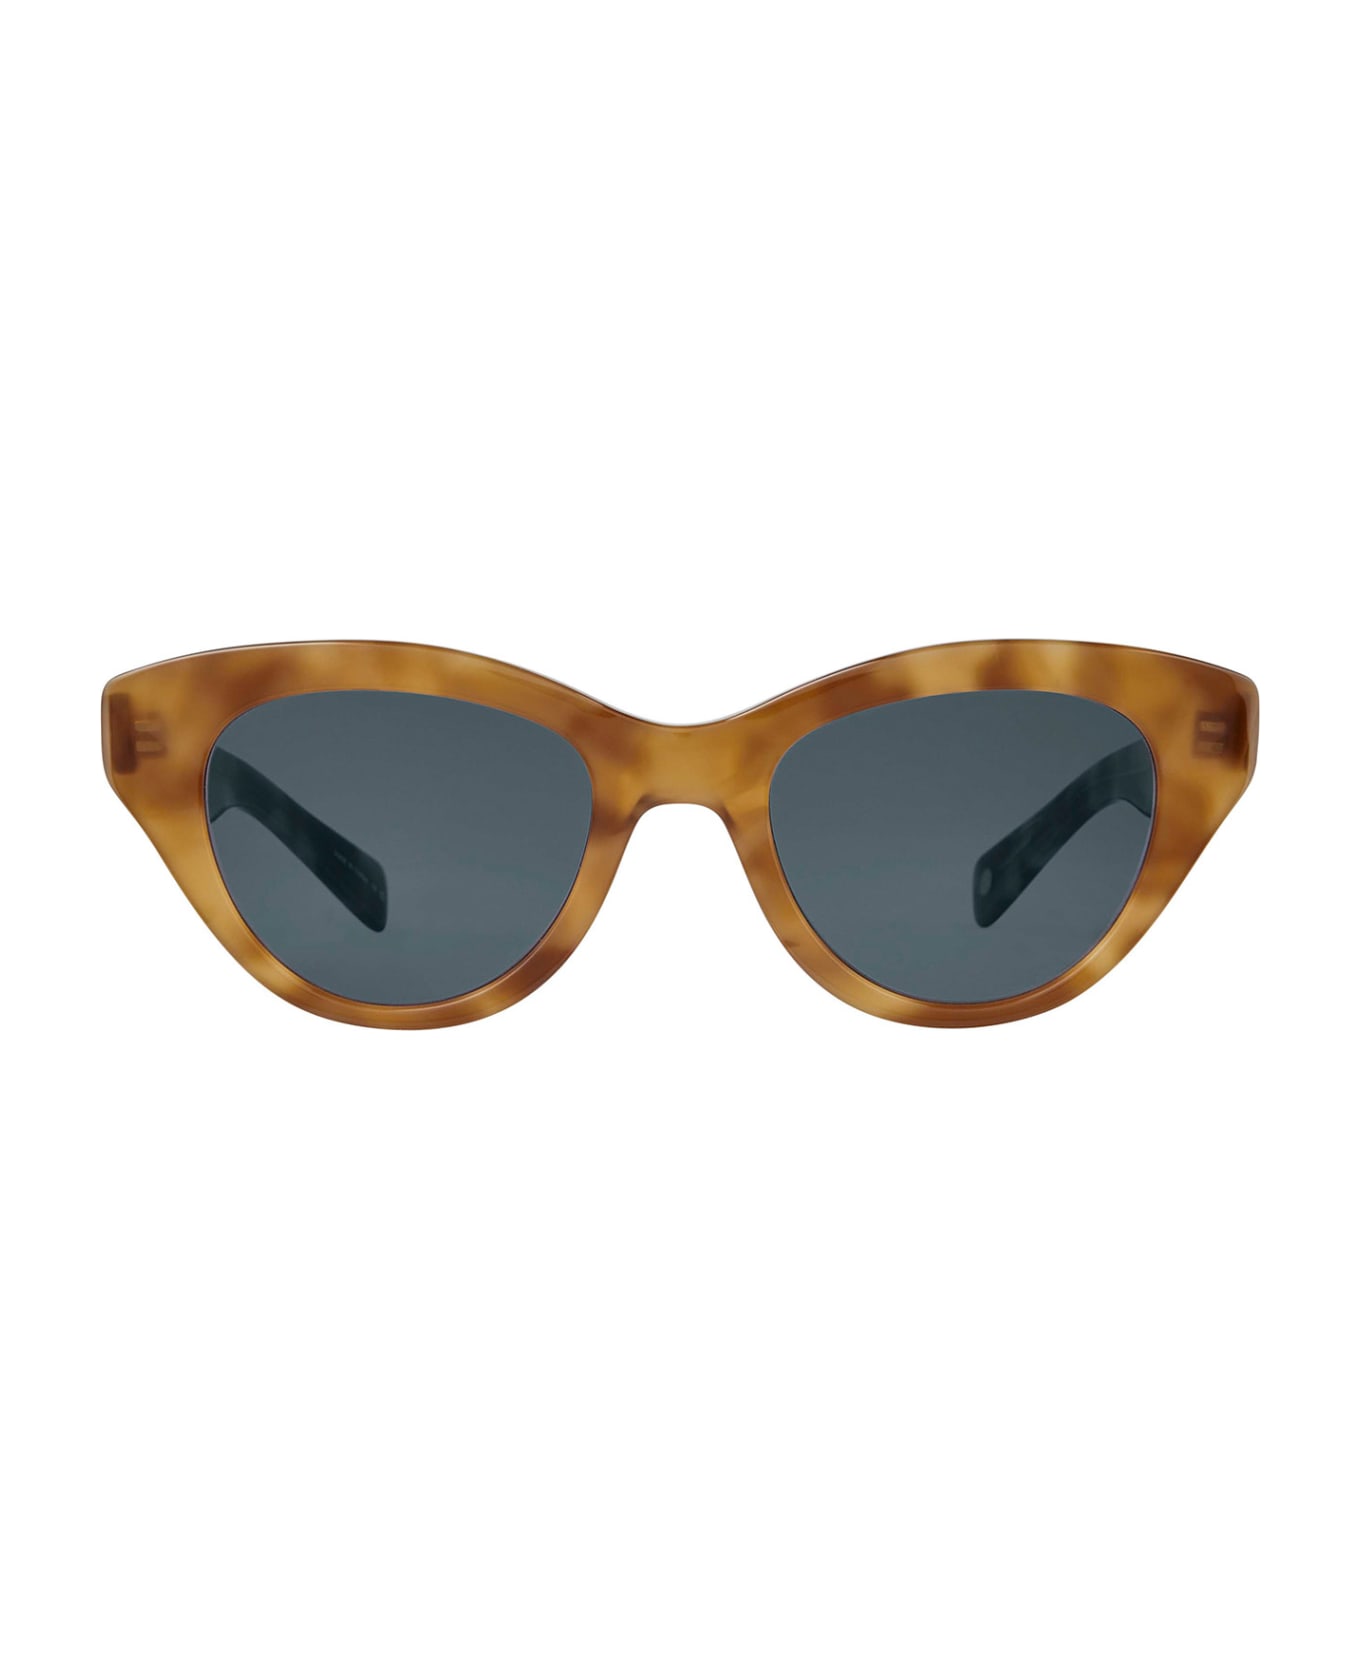 Garrett Leight Dottie Sun Ember Tortoise/semi-flat Blue Smoke Sunglasses - Ember Tortoise/Semi-Flat Blue Smoke